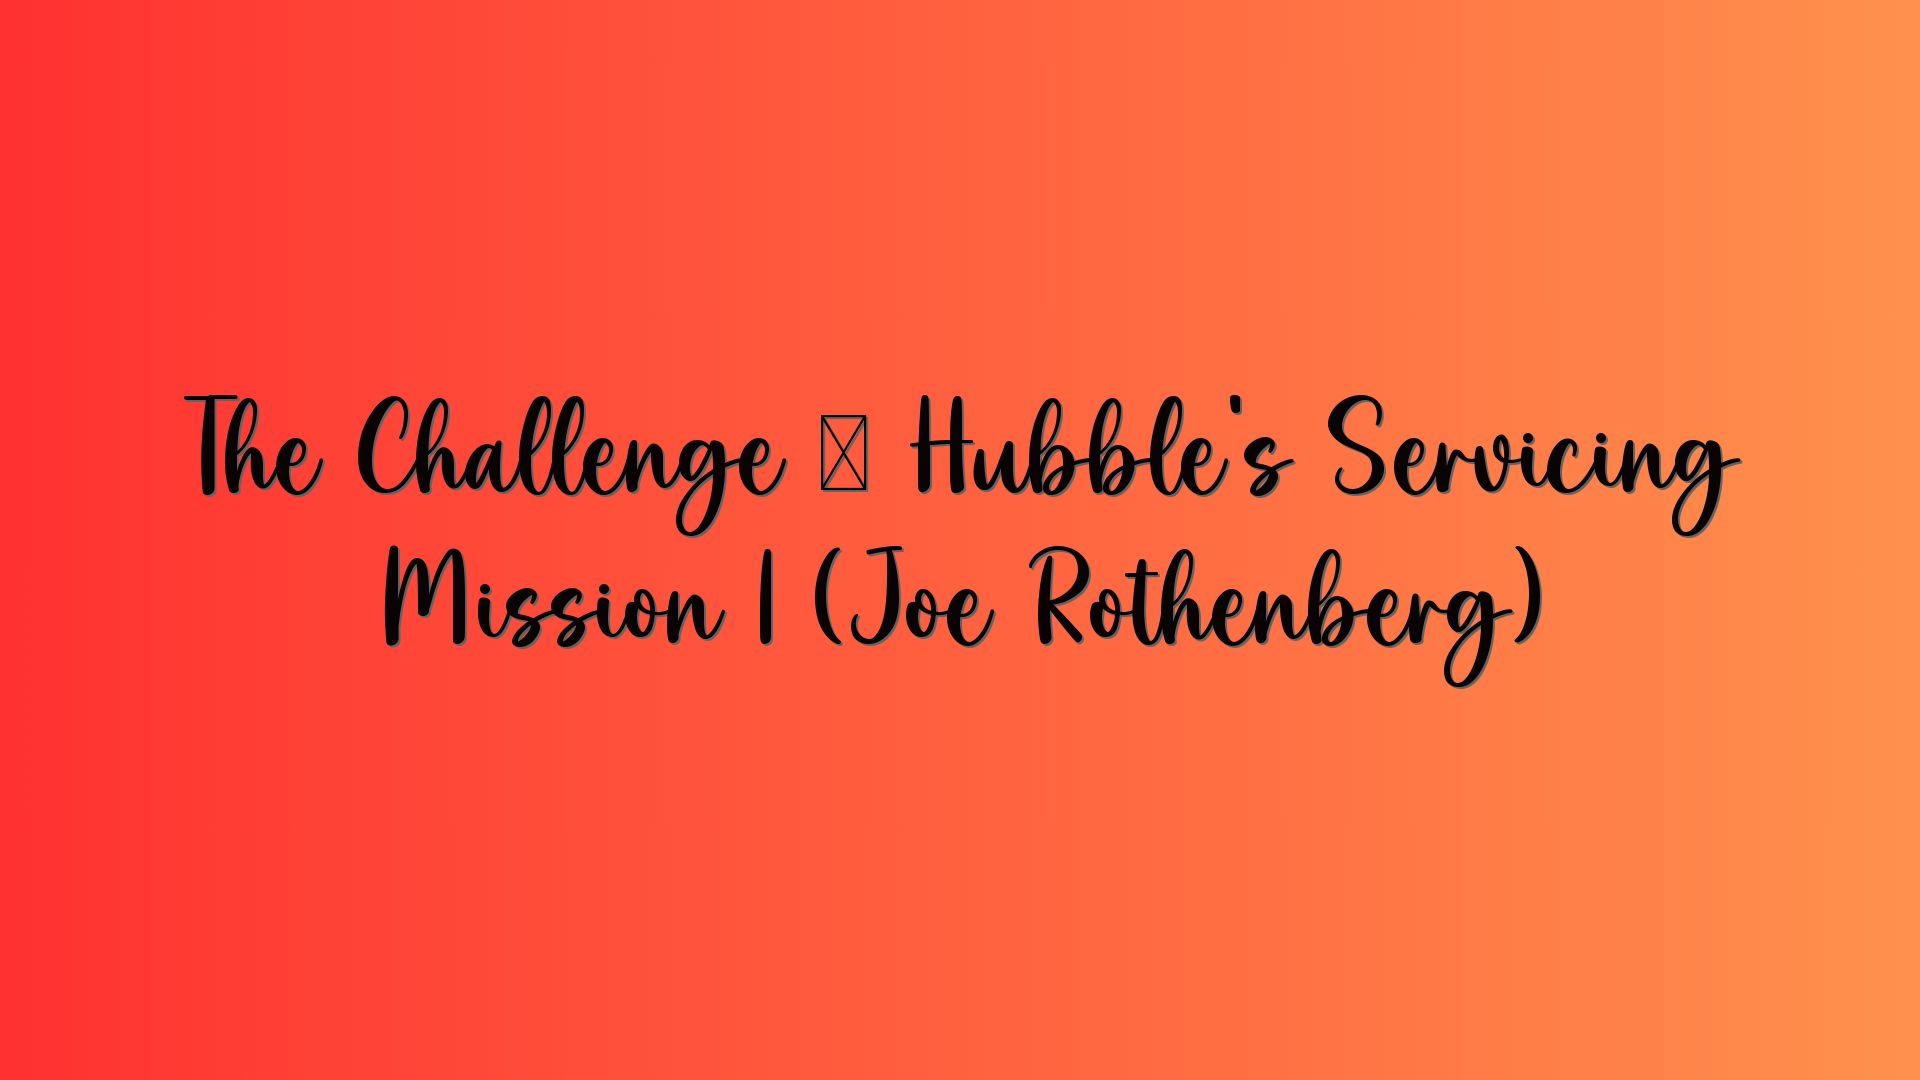 The Challenge – Hubble’s Servicing Mission 1 (Joe Rothenberg)